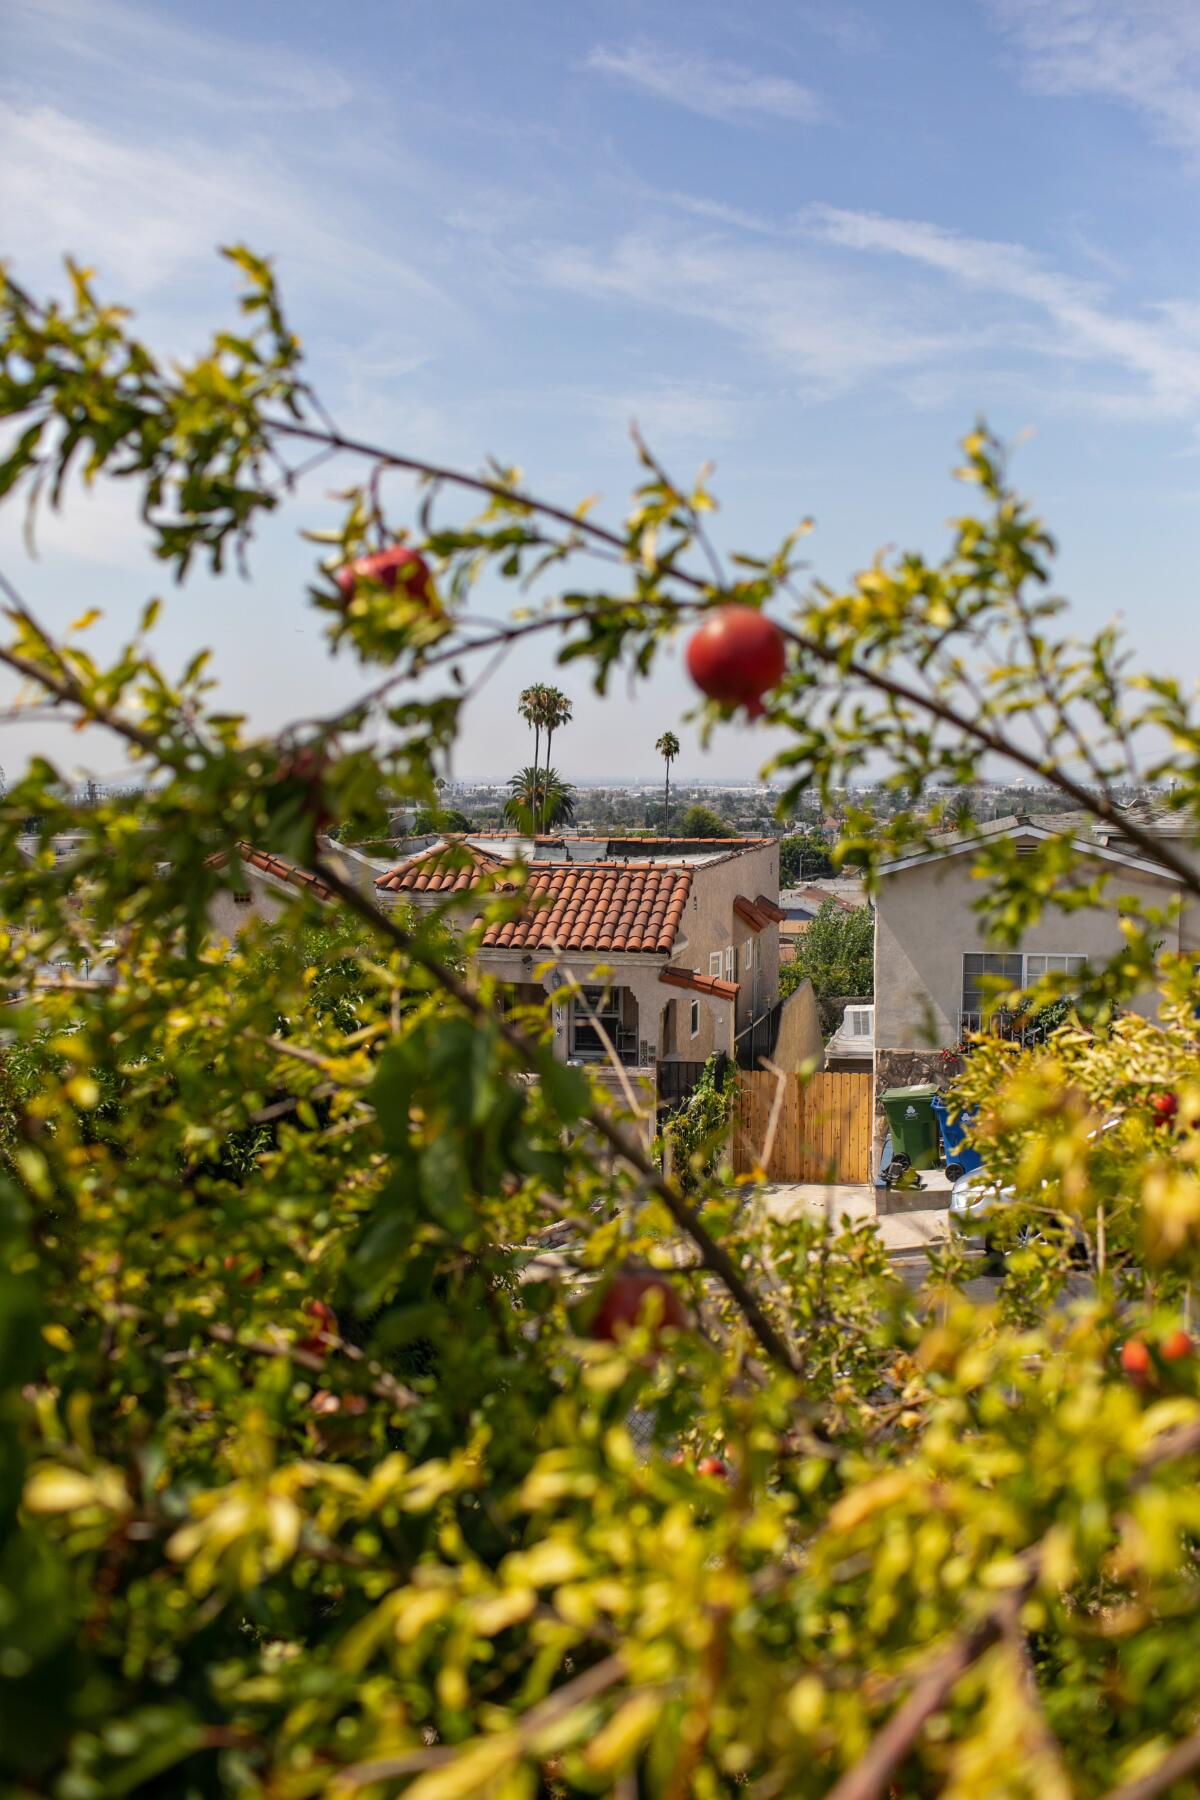 A view through fruit trees of a neighborhood.